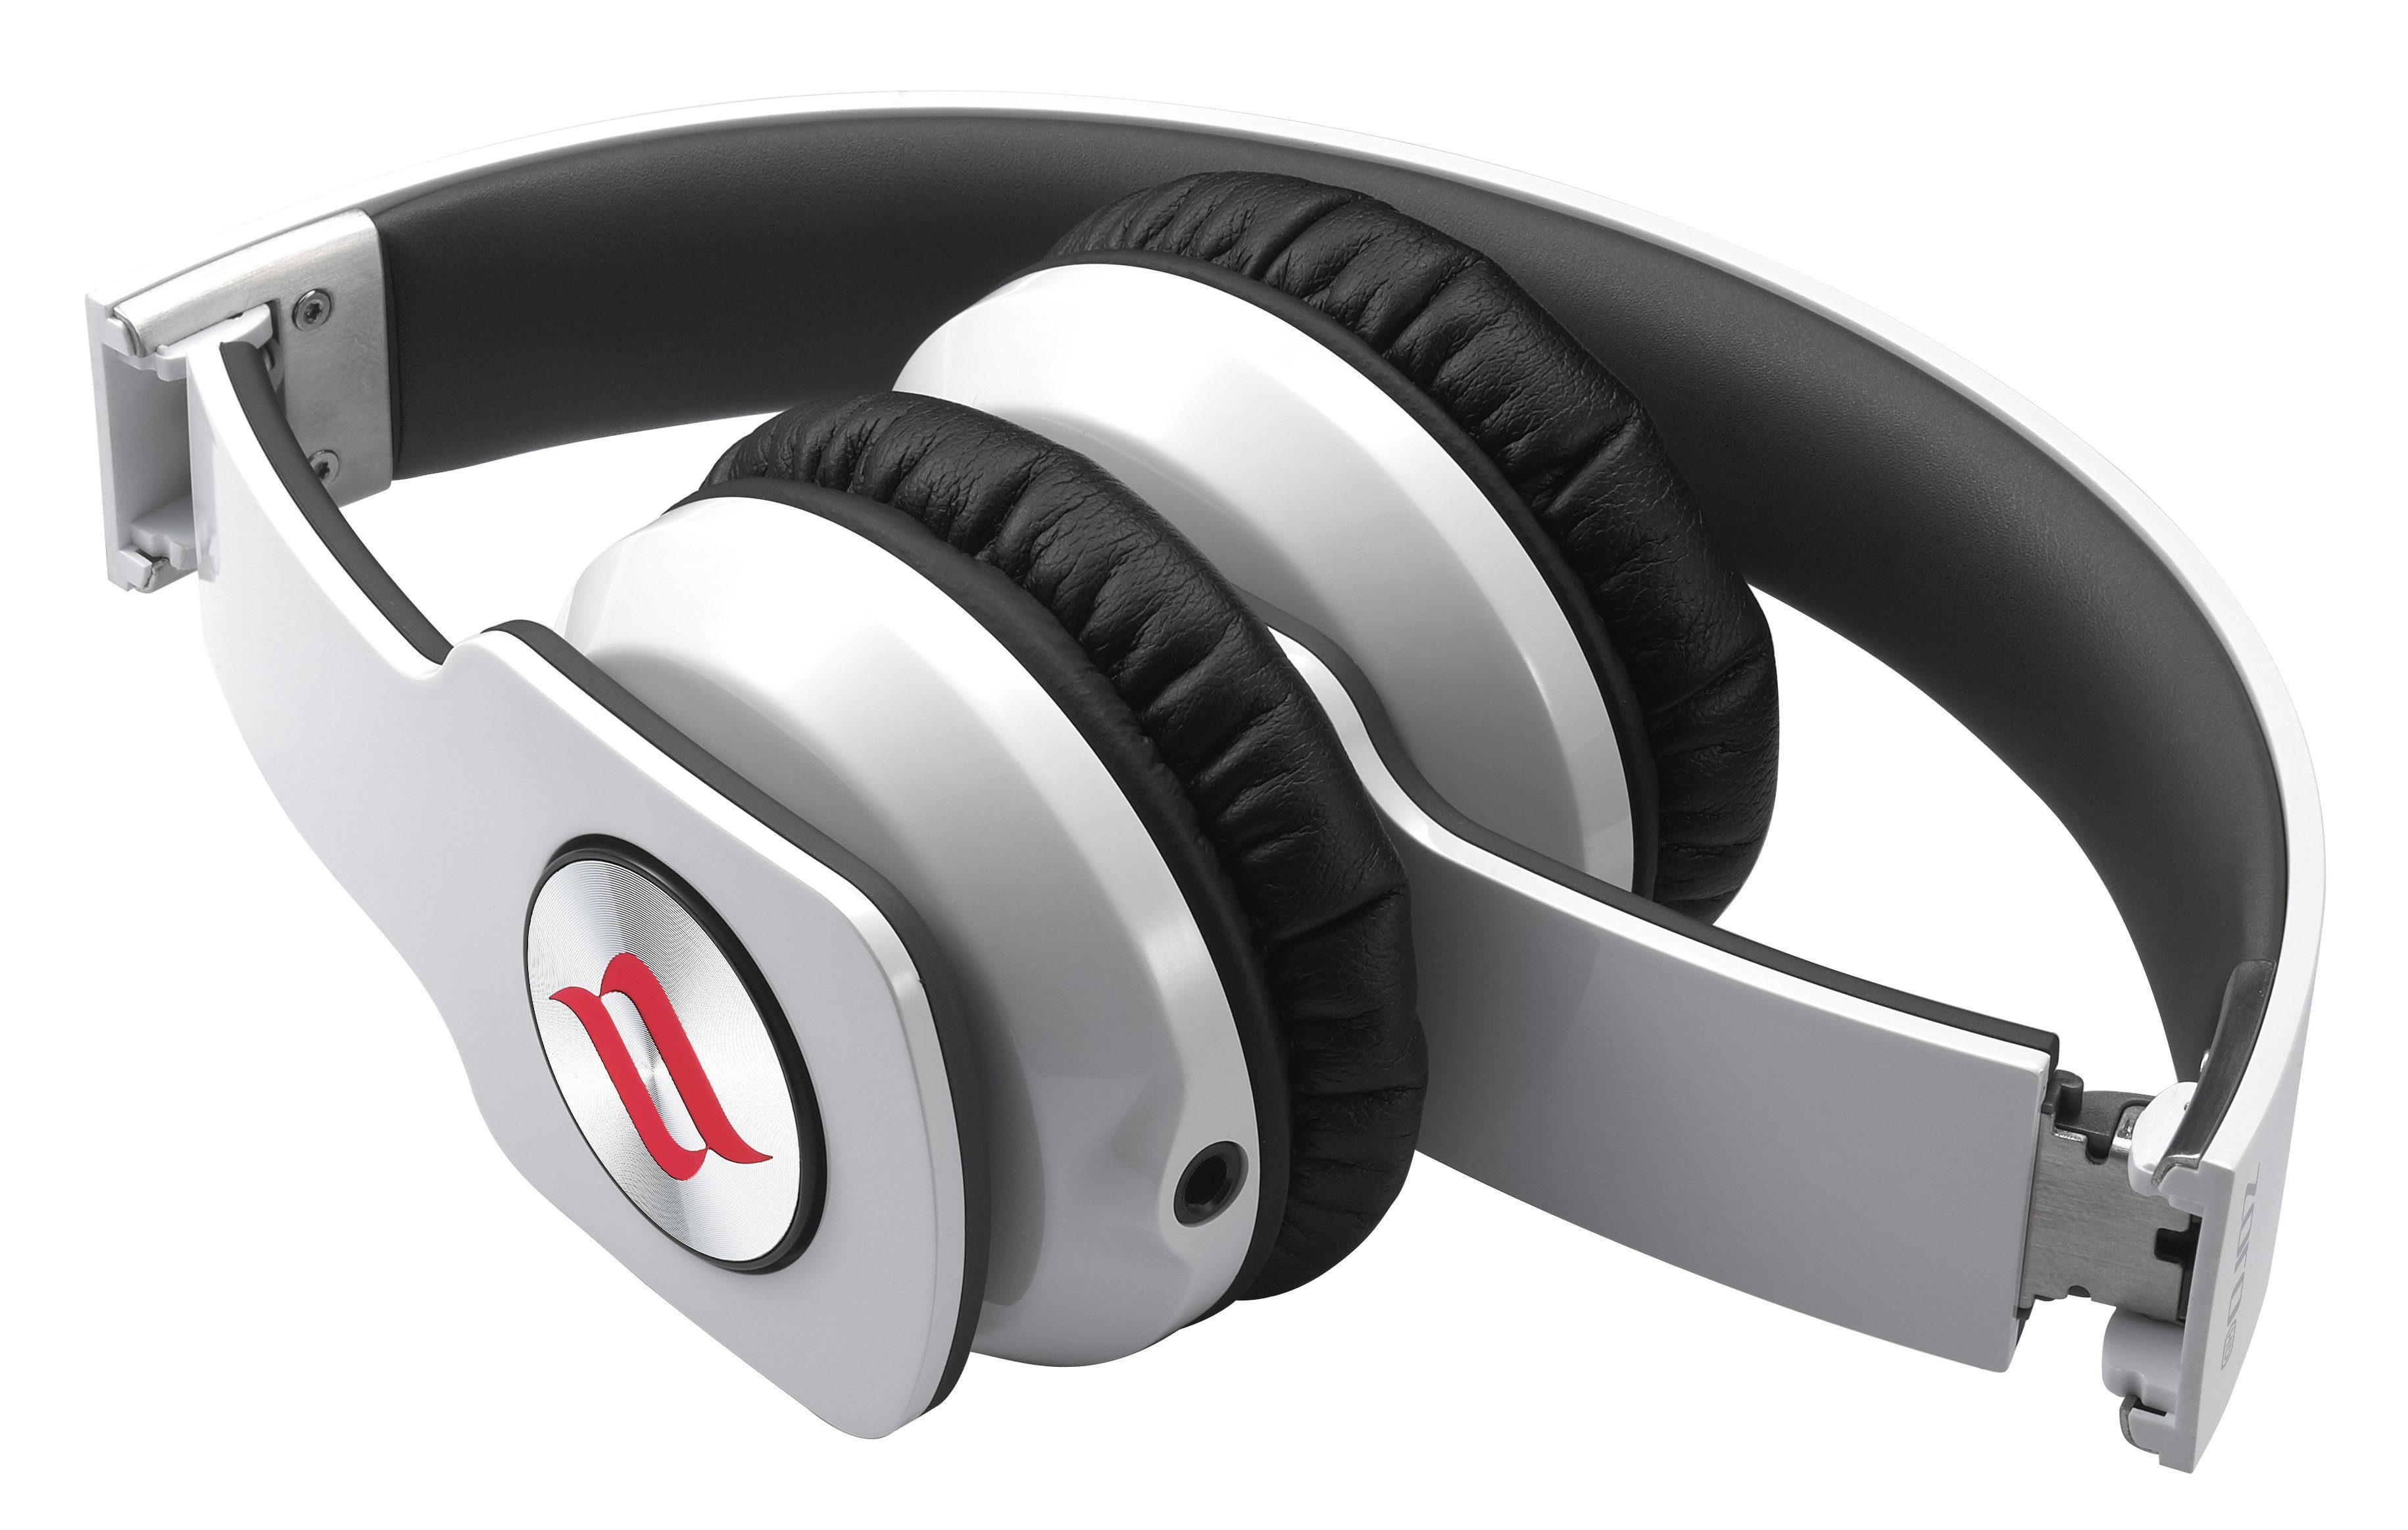 Kopfhörer Zoro On-Ear-Kopfhörer HD Weiß Noontec mit Poppstar (kabelgebunden, Kopfhörer Zoro Flachkabel) MF3120(S)